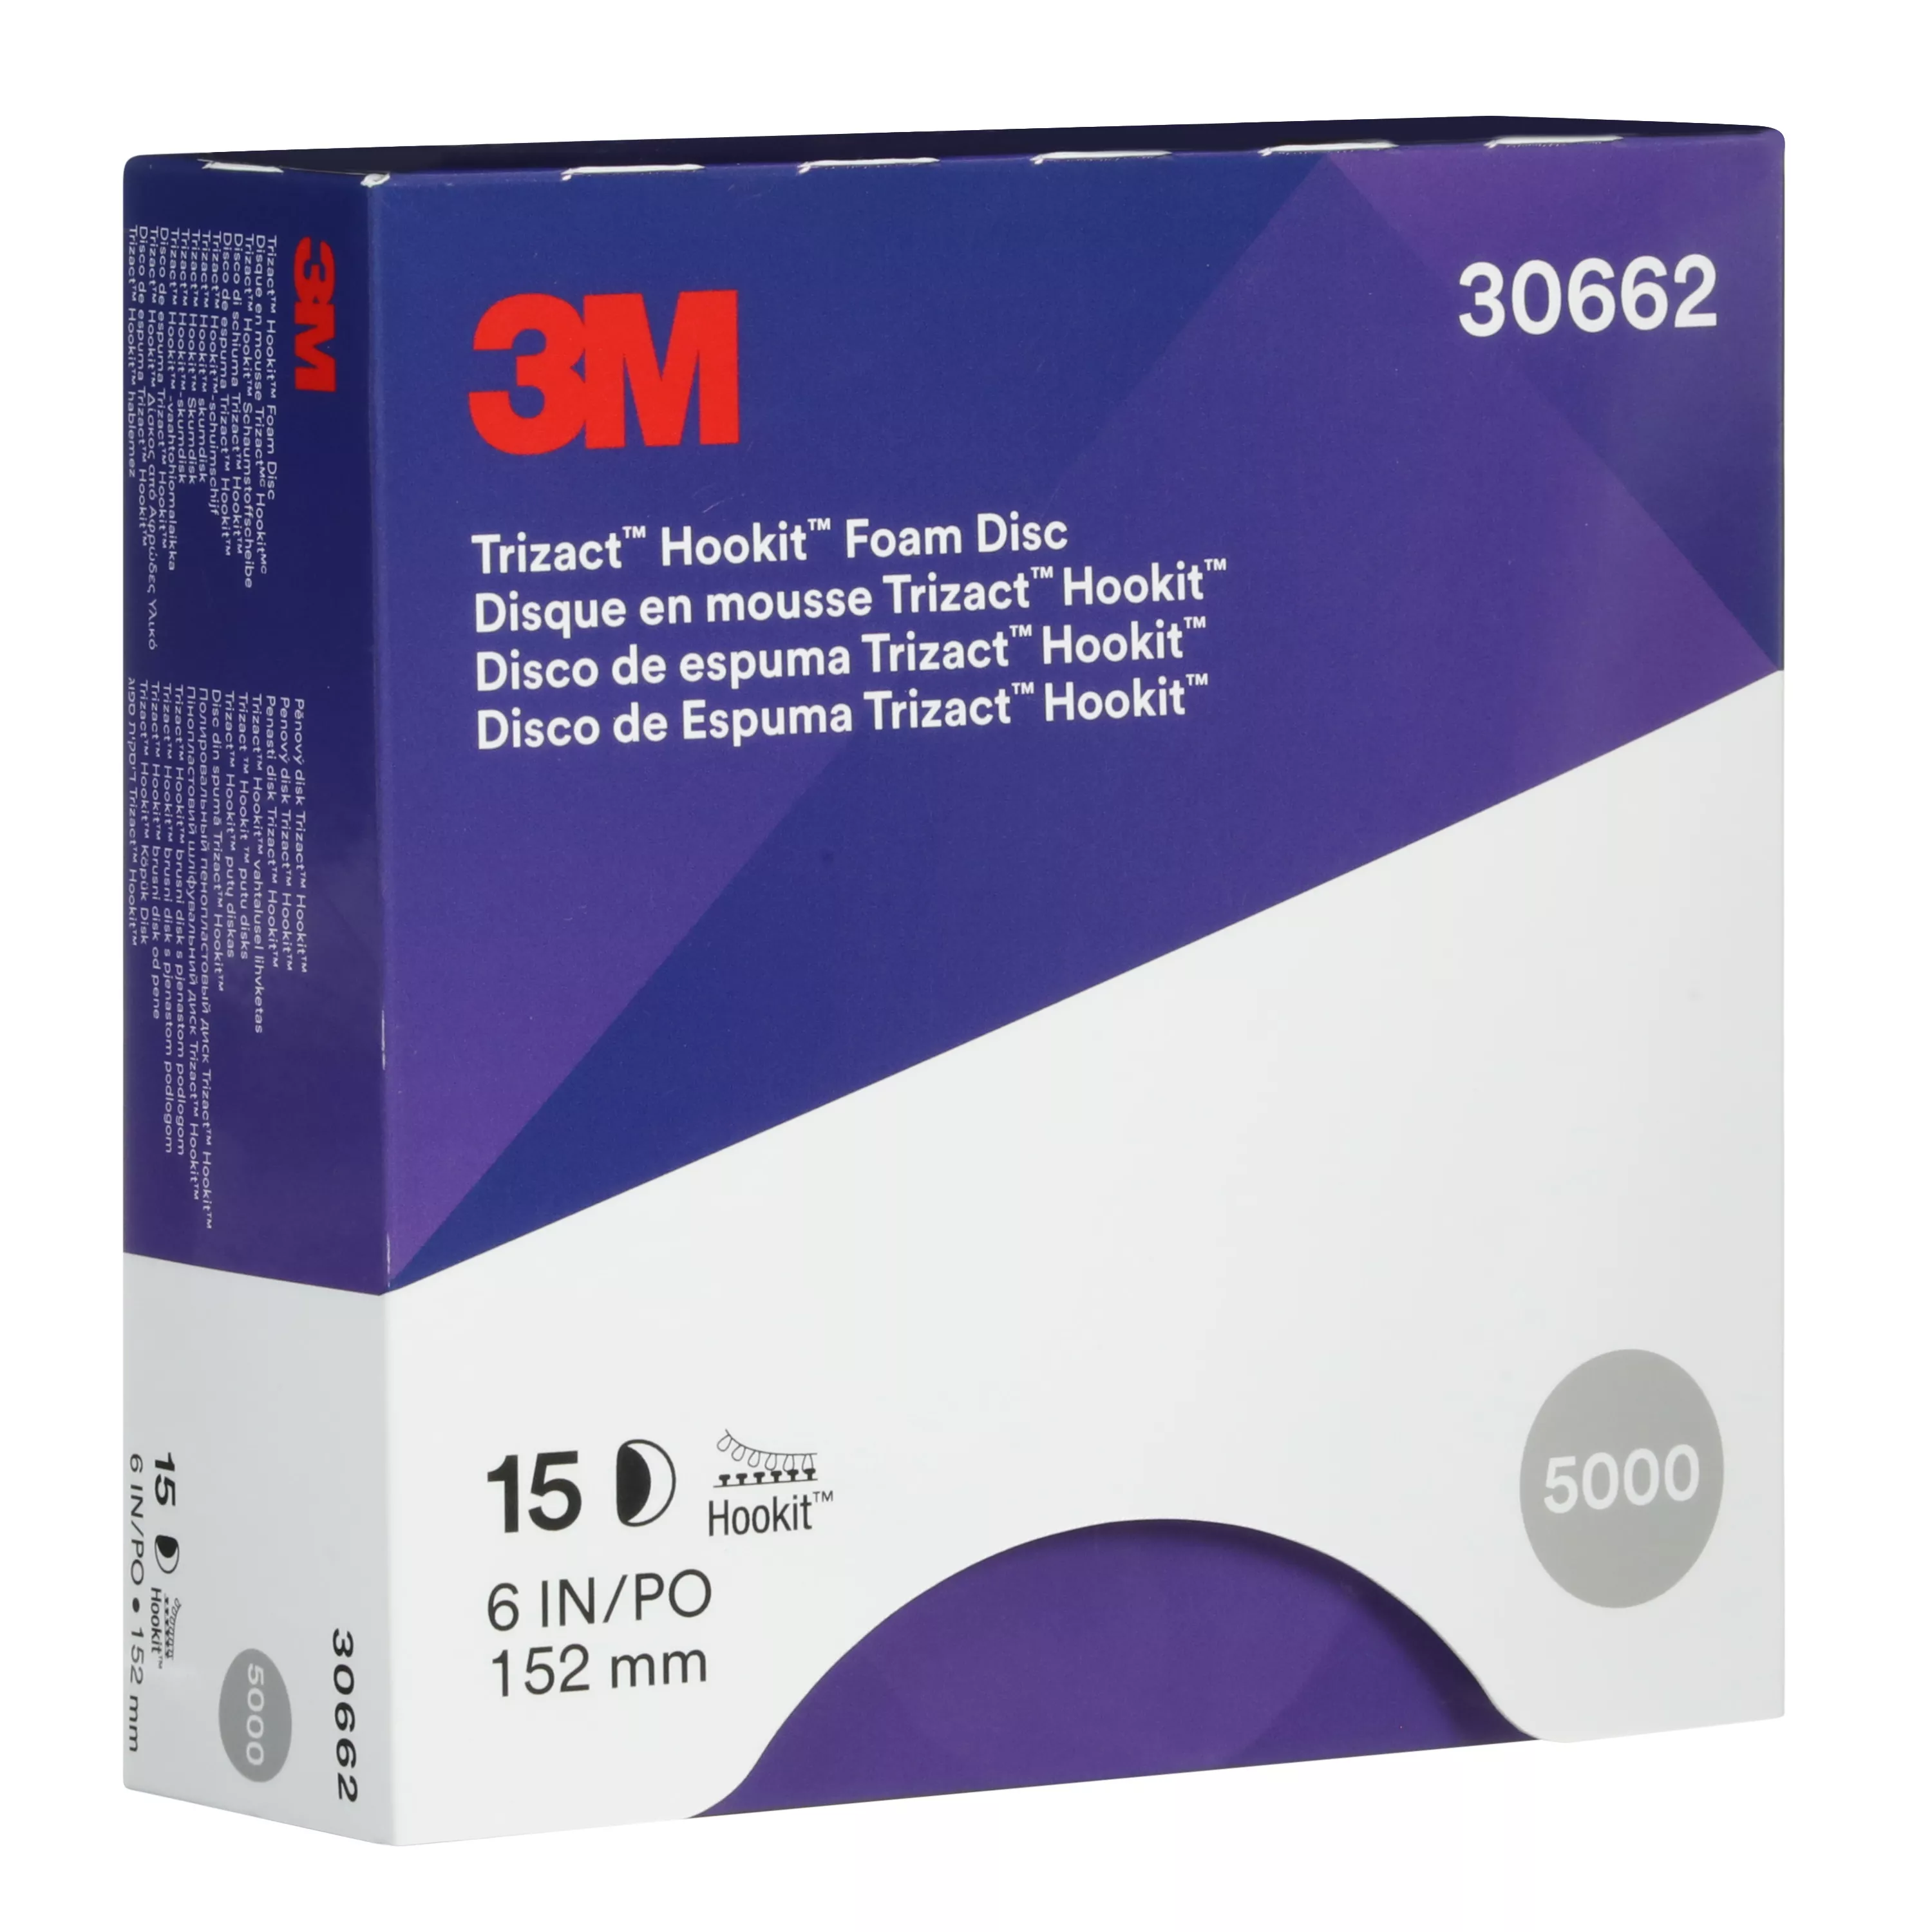 Product Number 443SA | 3M™ Trizact™ Hookit™ Foam Disc 30662